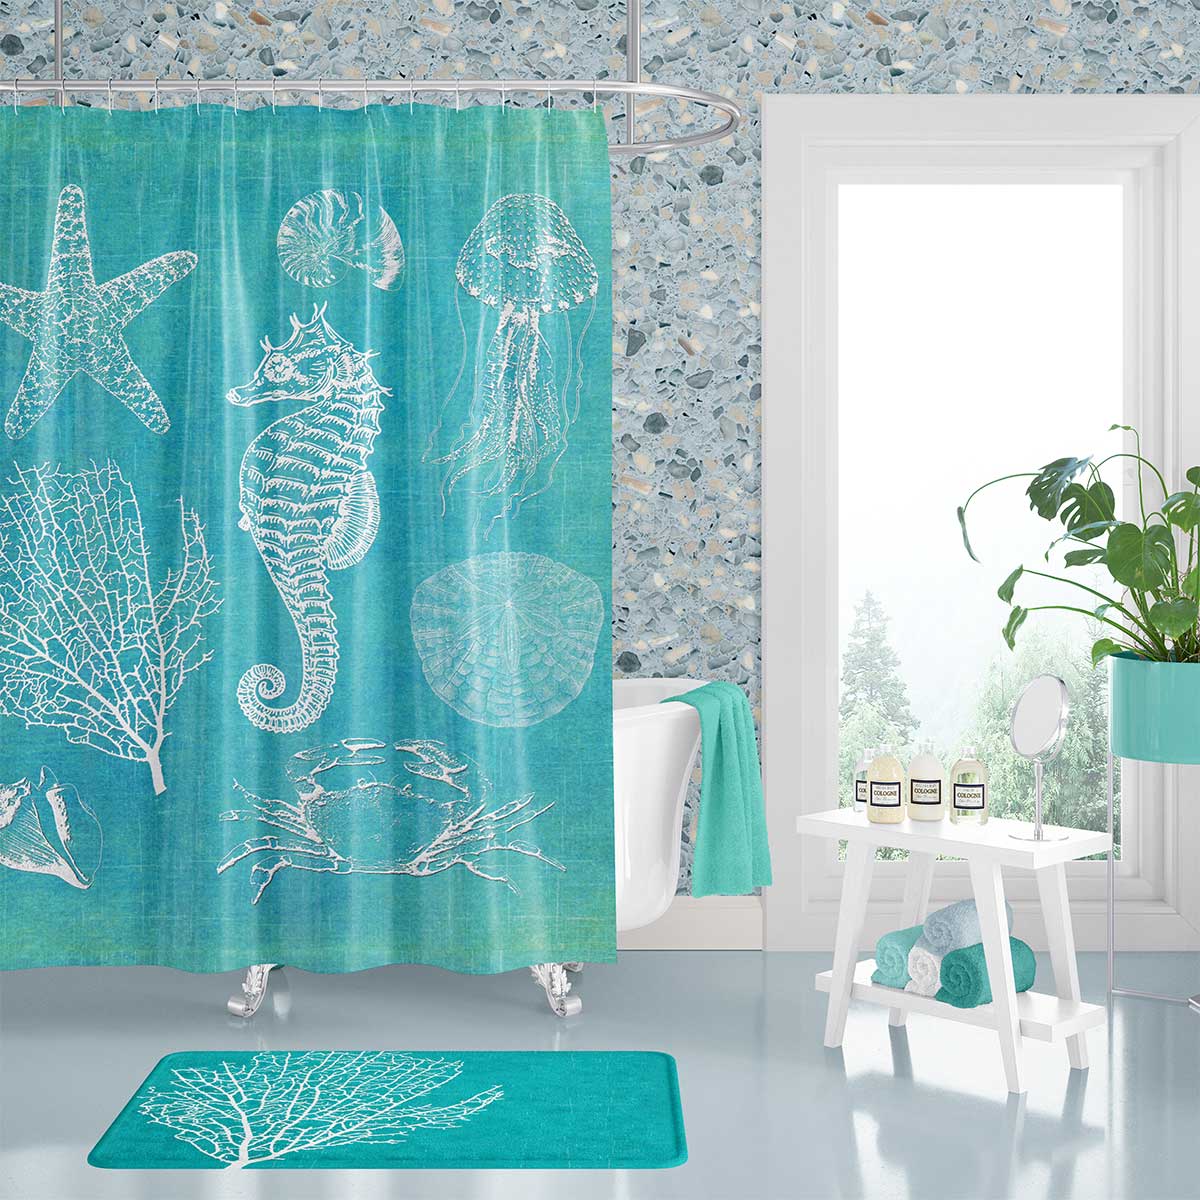 Aqua Blue Ocean Beach Shower Curtain for the bathroom.